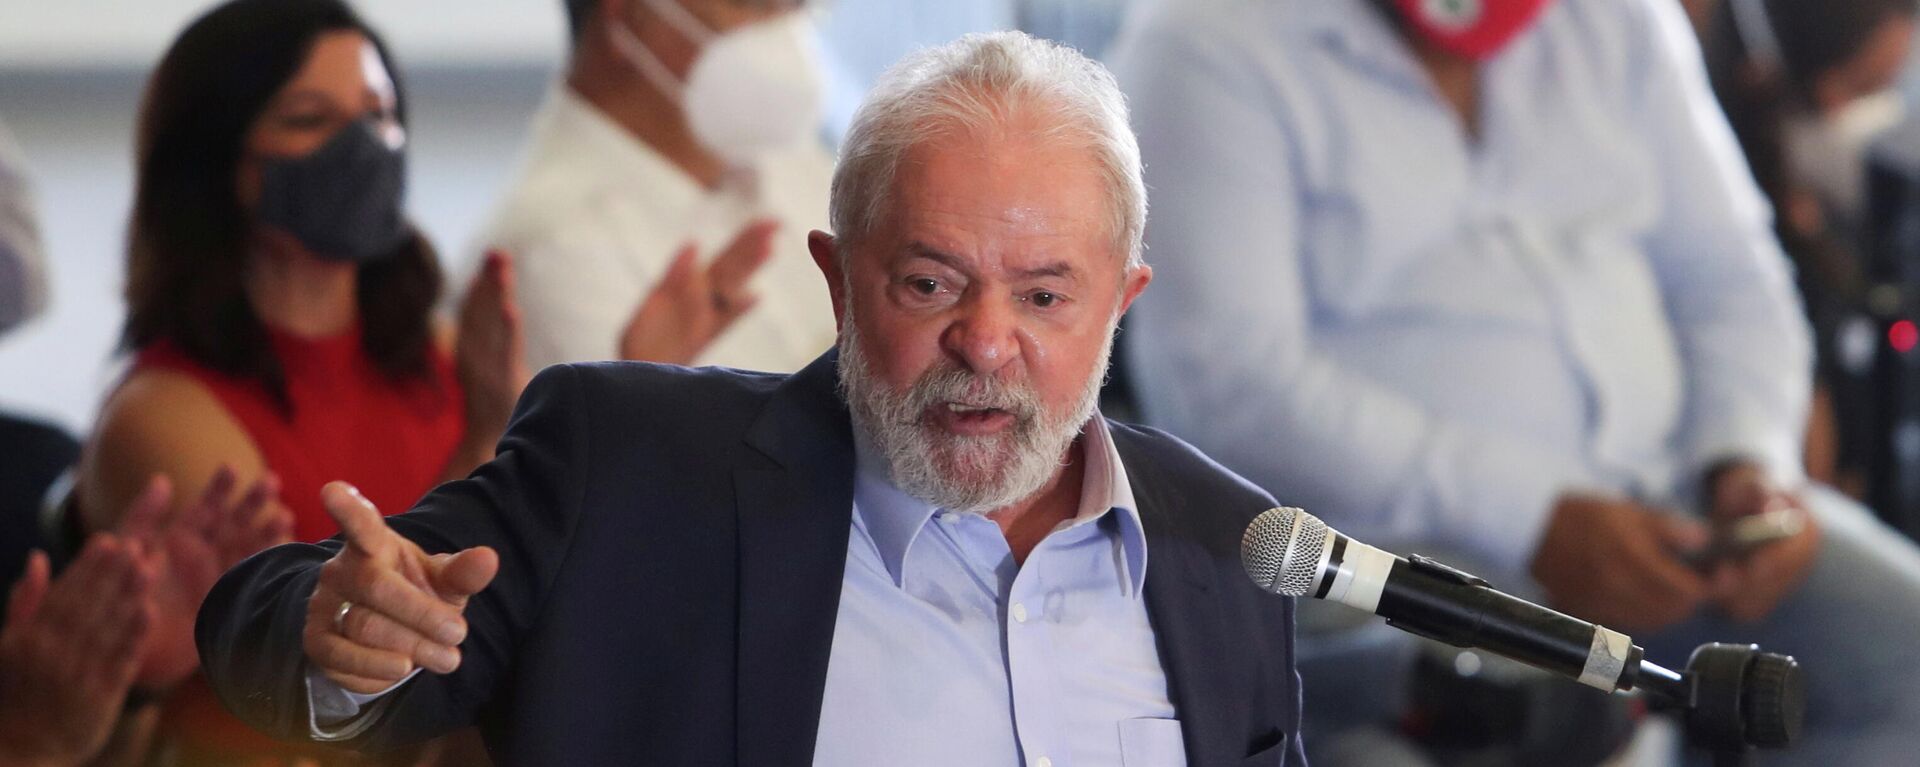 Luiz Inácio Lula da Silva, expresidente de Brasil - Sputnik Mundo, 1920, 20.05.2021